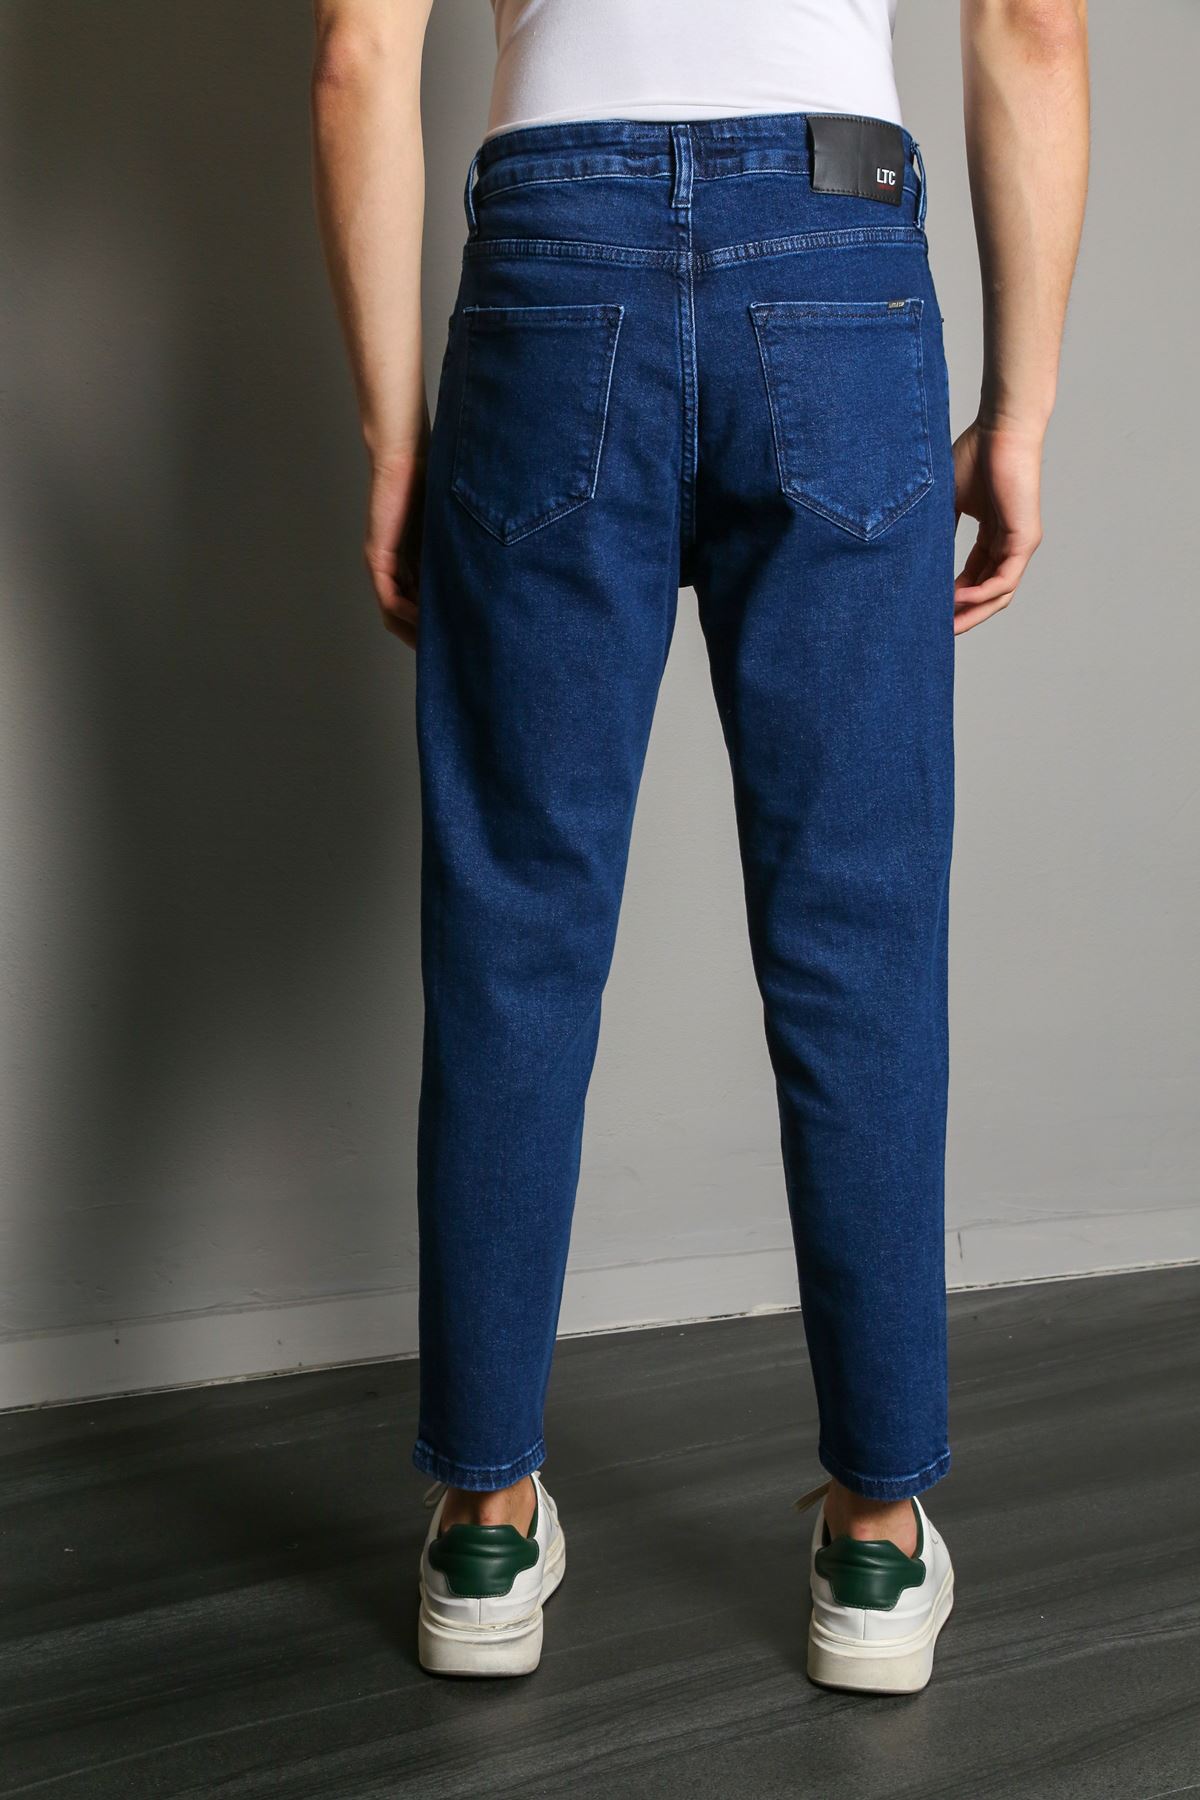  Erkek Fermuarlı Mavi Jogger Jeans Pantolon 